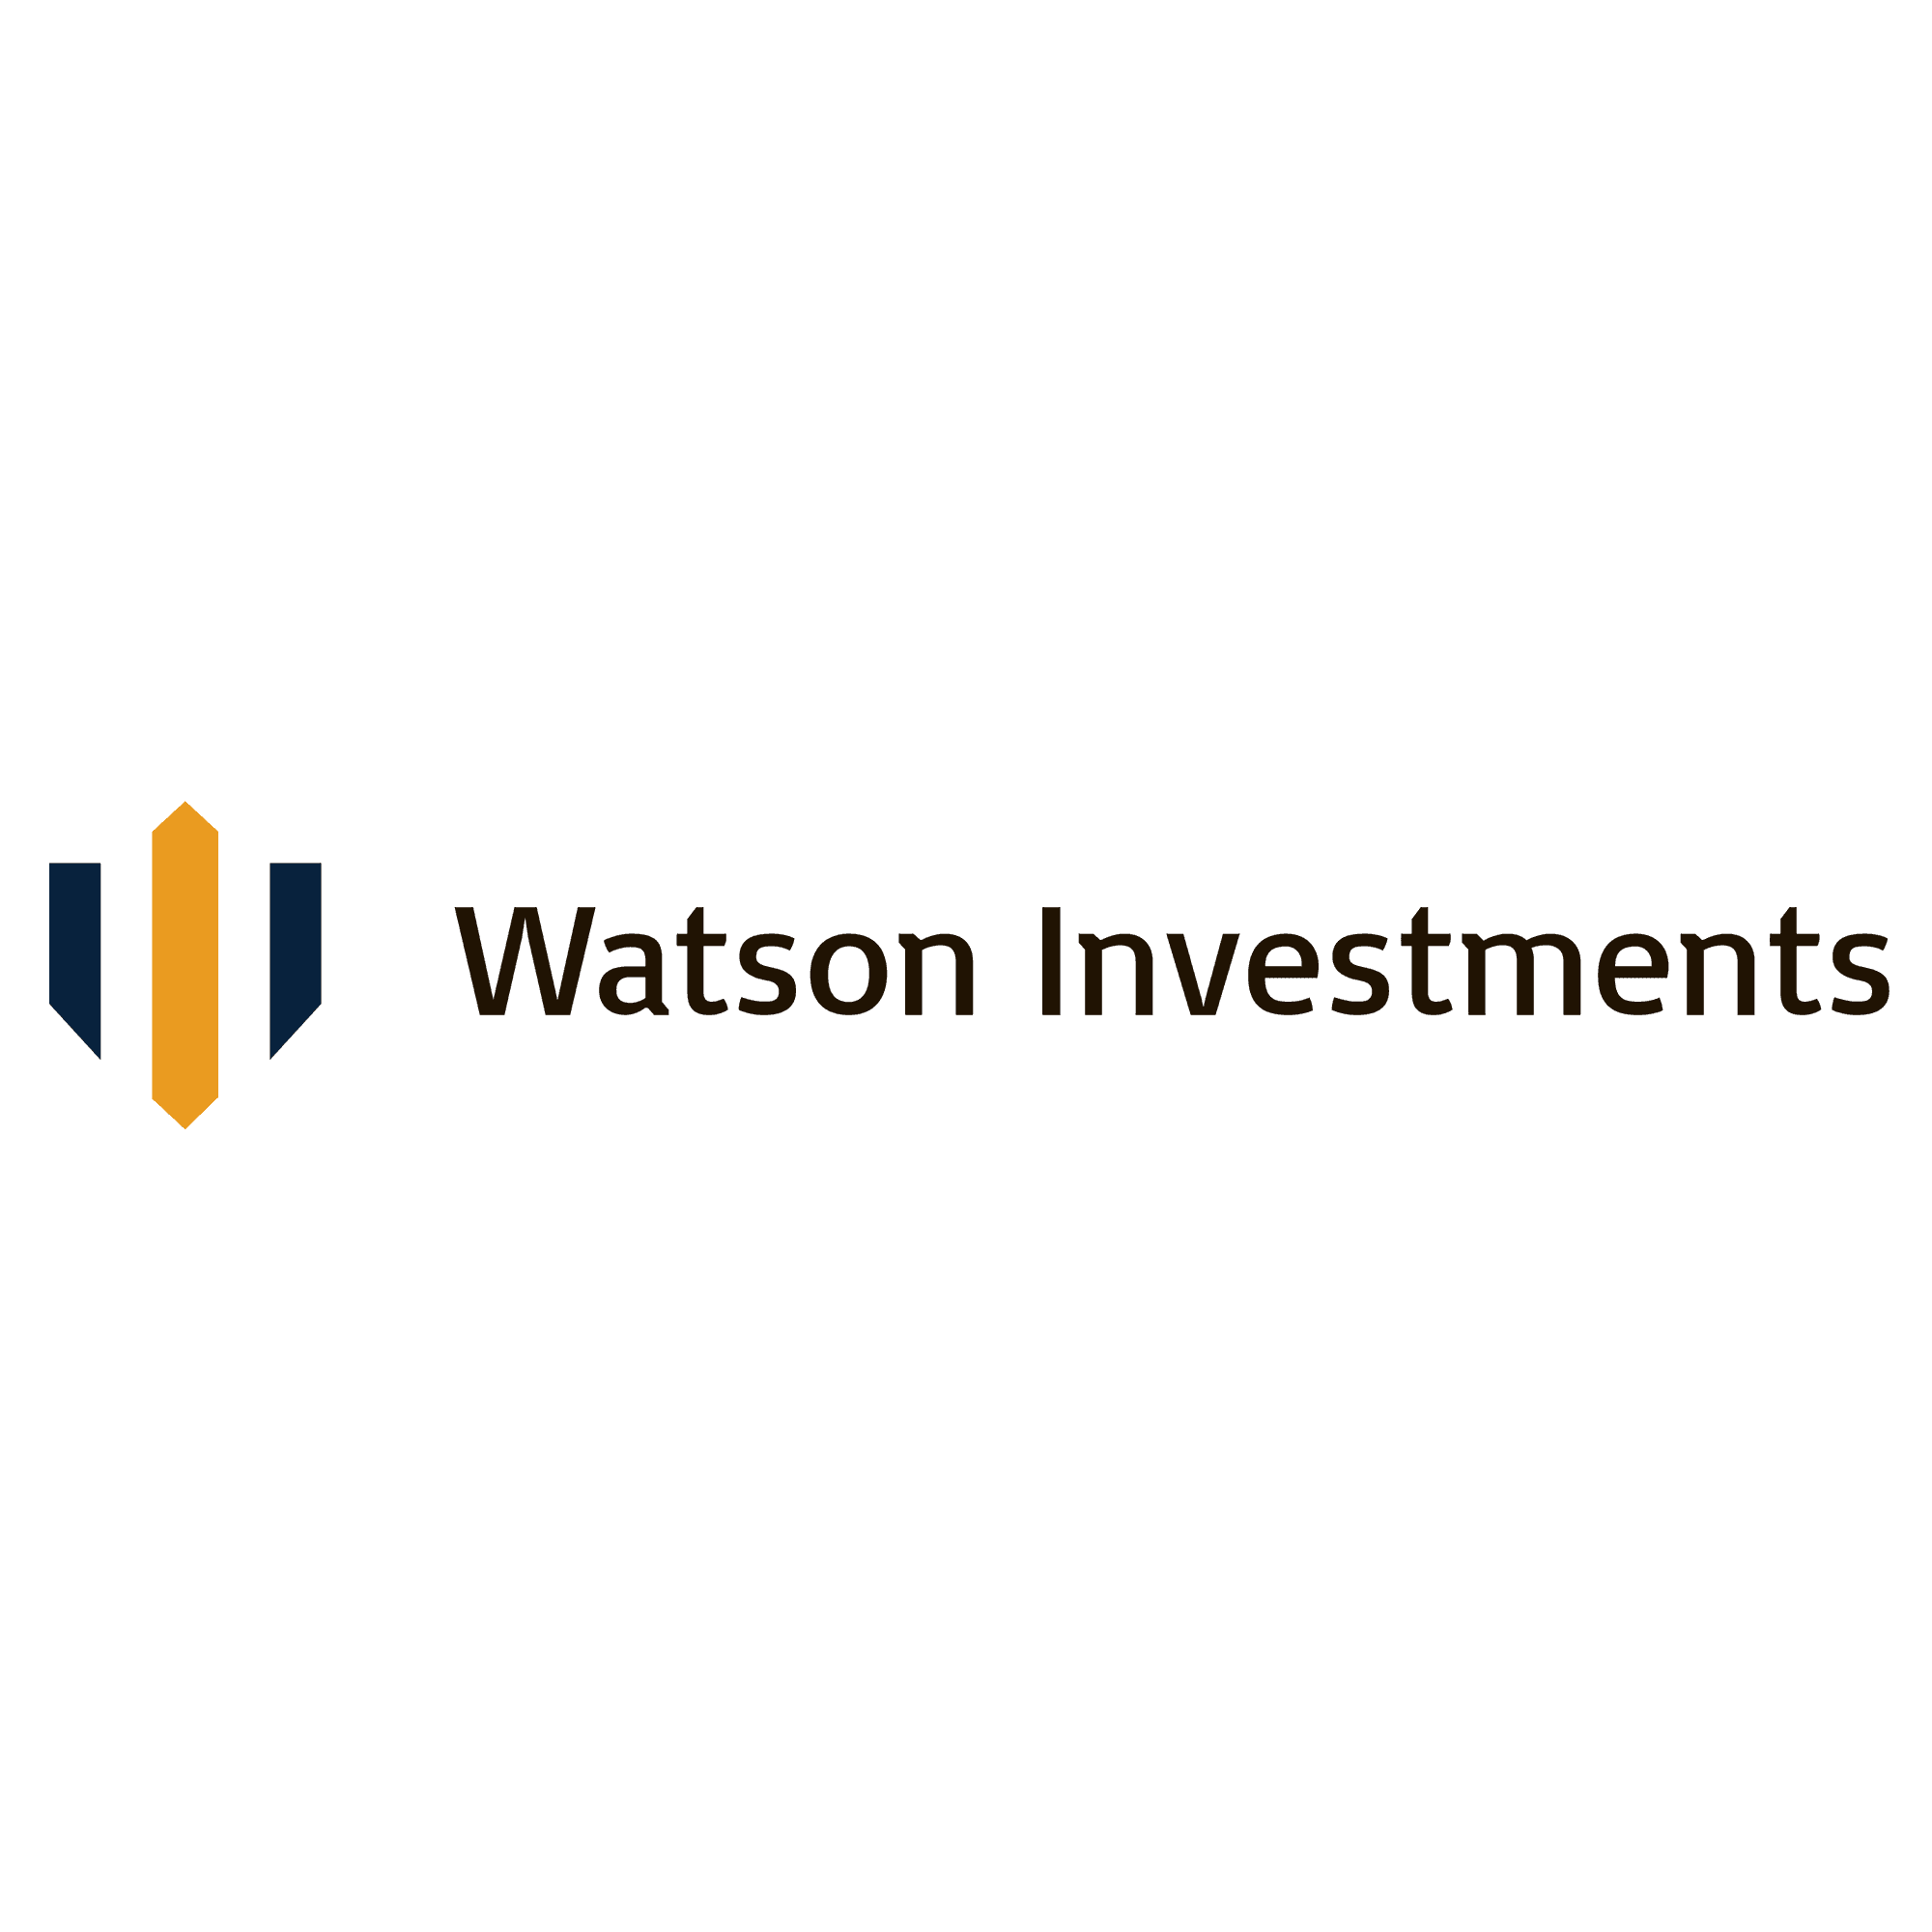 Watson Investments logo